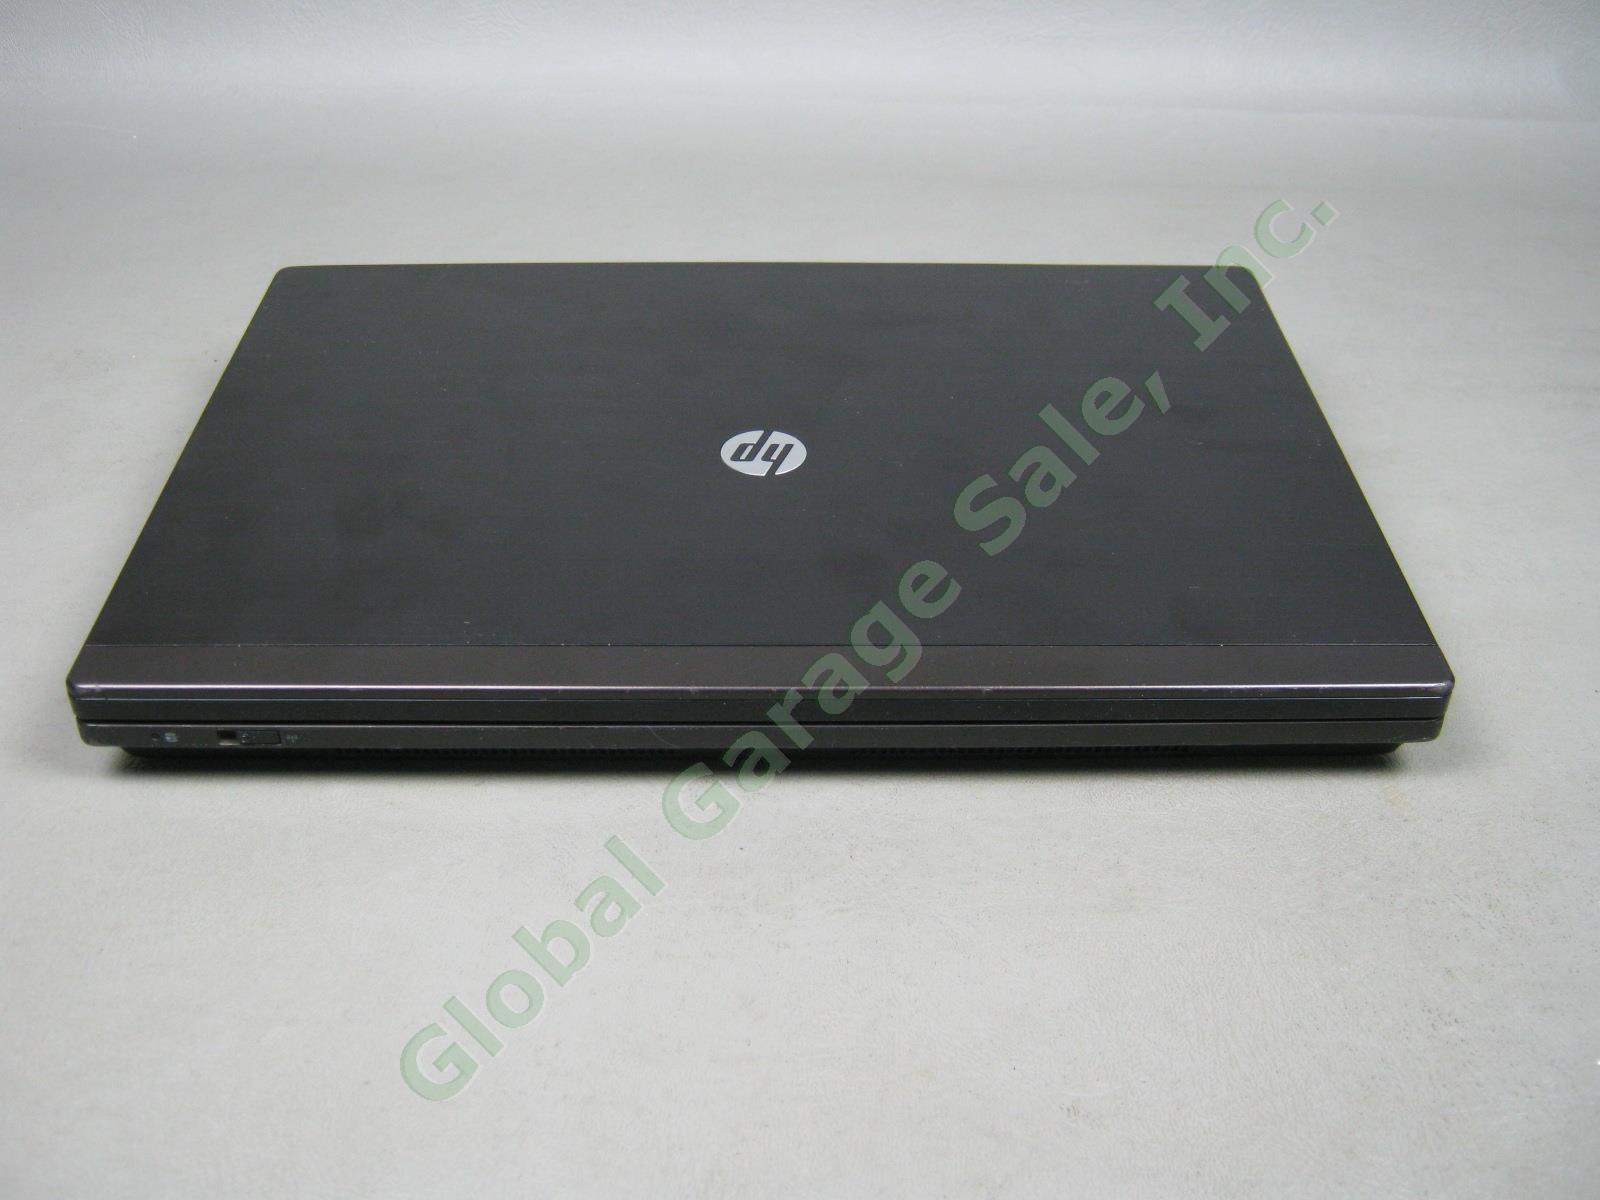 HP Mini 5103 10.1" Netbook Laptop Intel Atom 1.83GHz 2GB RAM 160GB HDD Windows 7 4